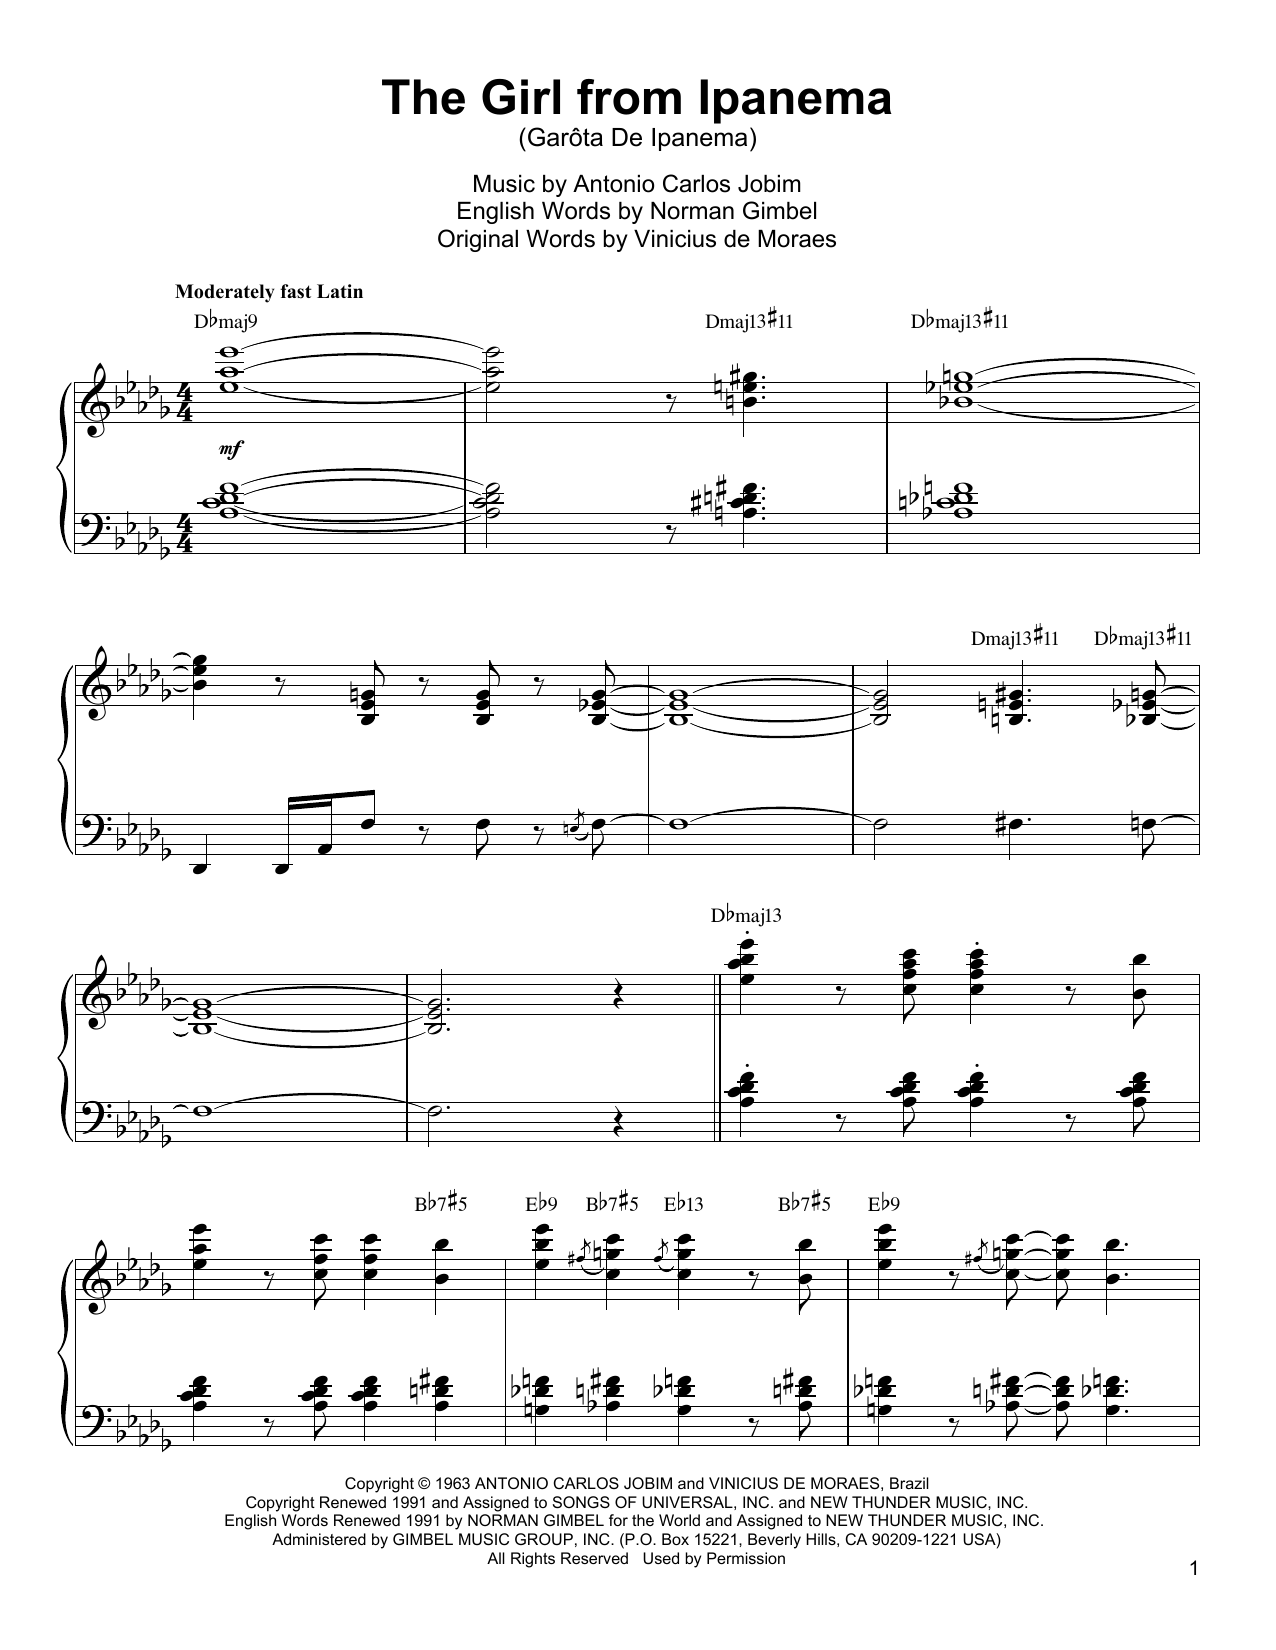 Oscar Peterson The Girl From Ipanema (Garota De Ipanema) Sheet Music Notes & Chords for Piano Transcription - Download or Print PDF